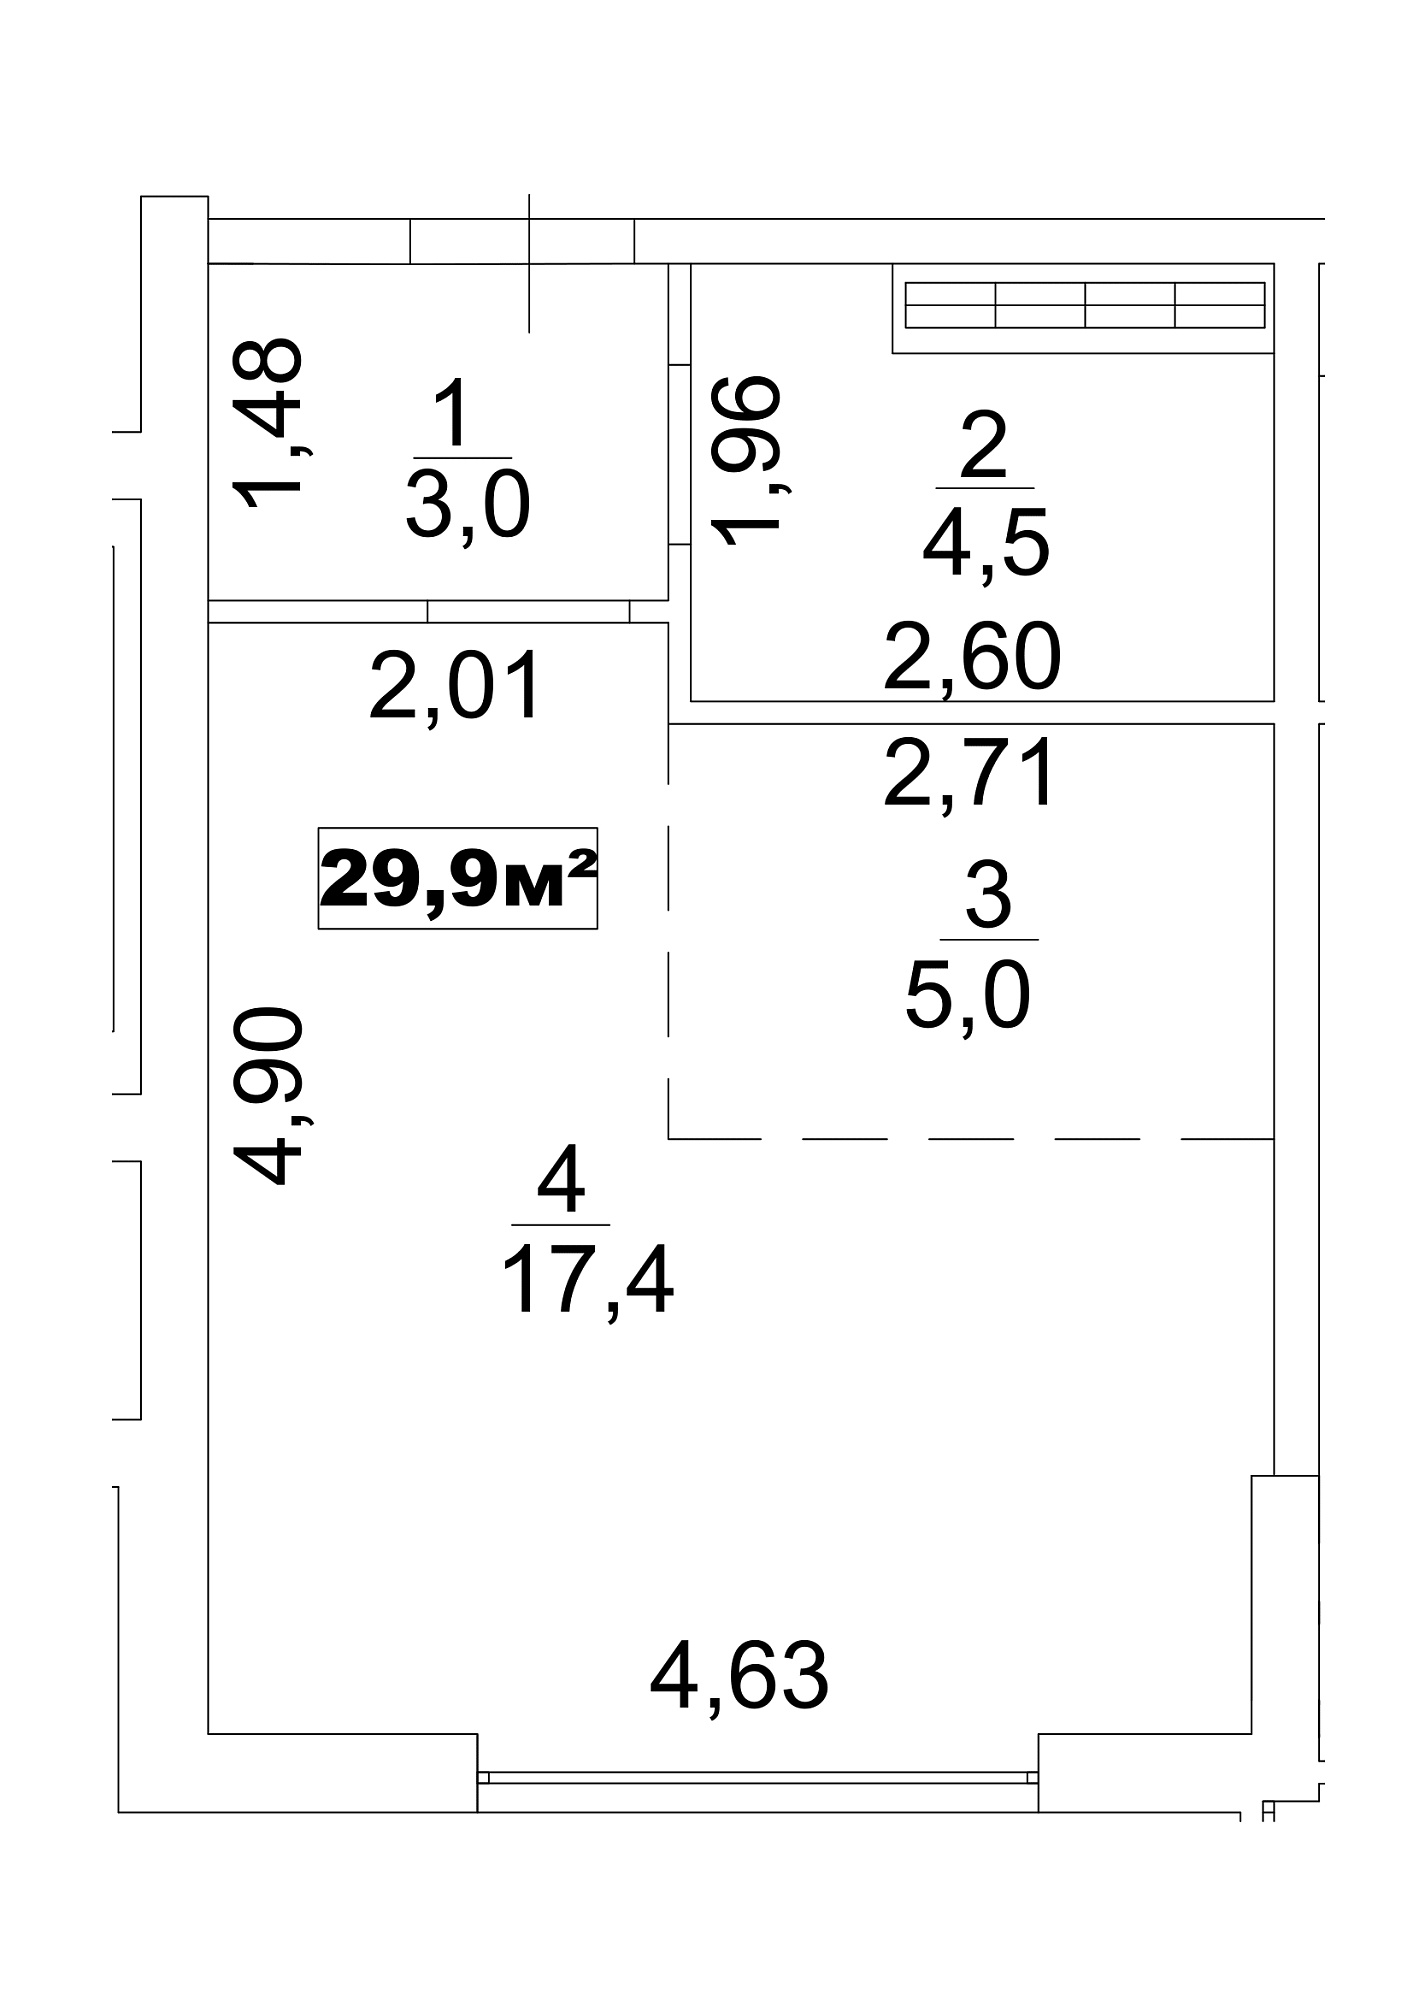 Planning Smart flats area 29.9m2, AB-13-02/00015.